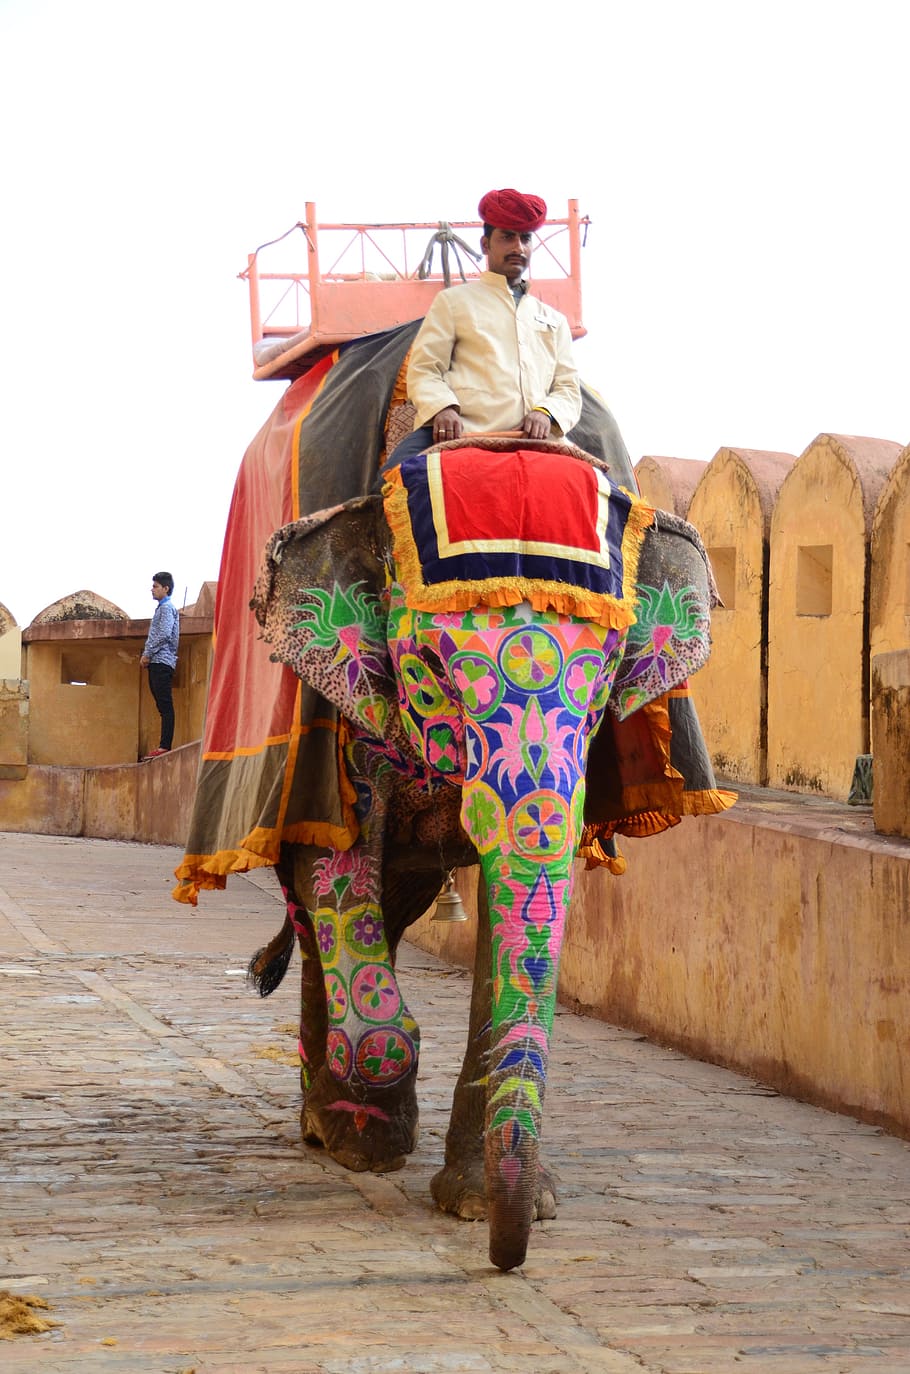 man riding on elephant at daytime, amber palace, india, mammal